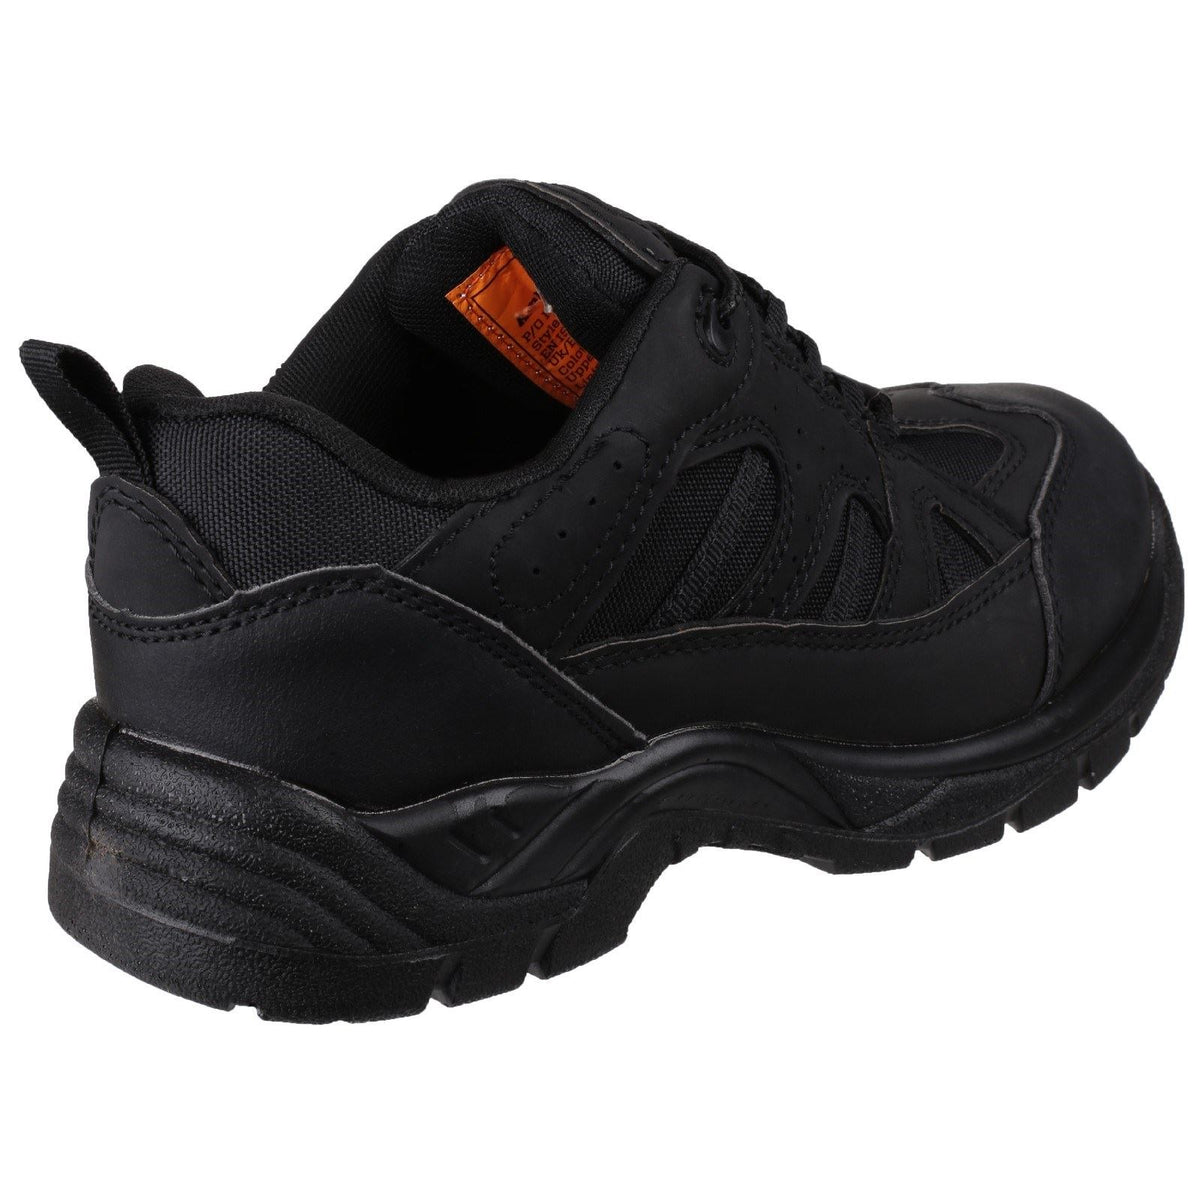 Amblers Safety FS214 Vegan Friendly Safety Shoes